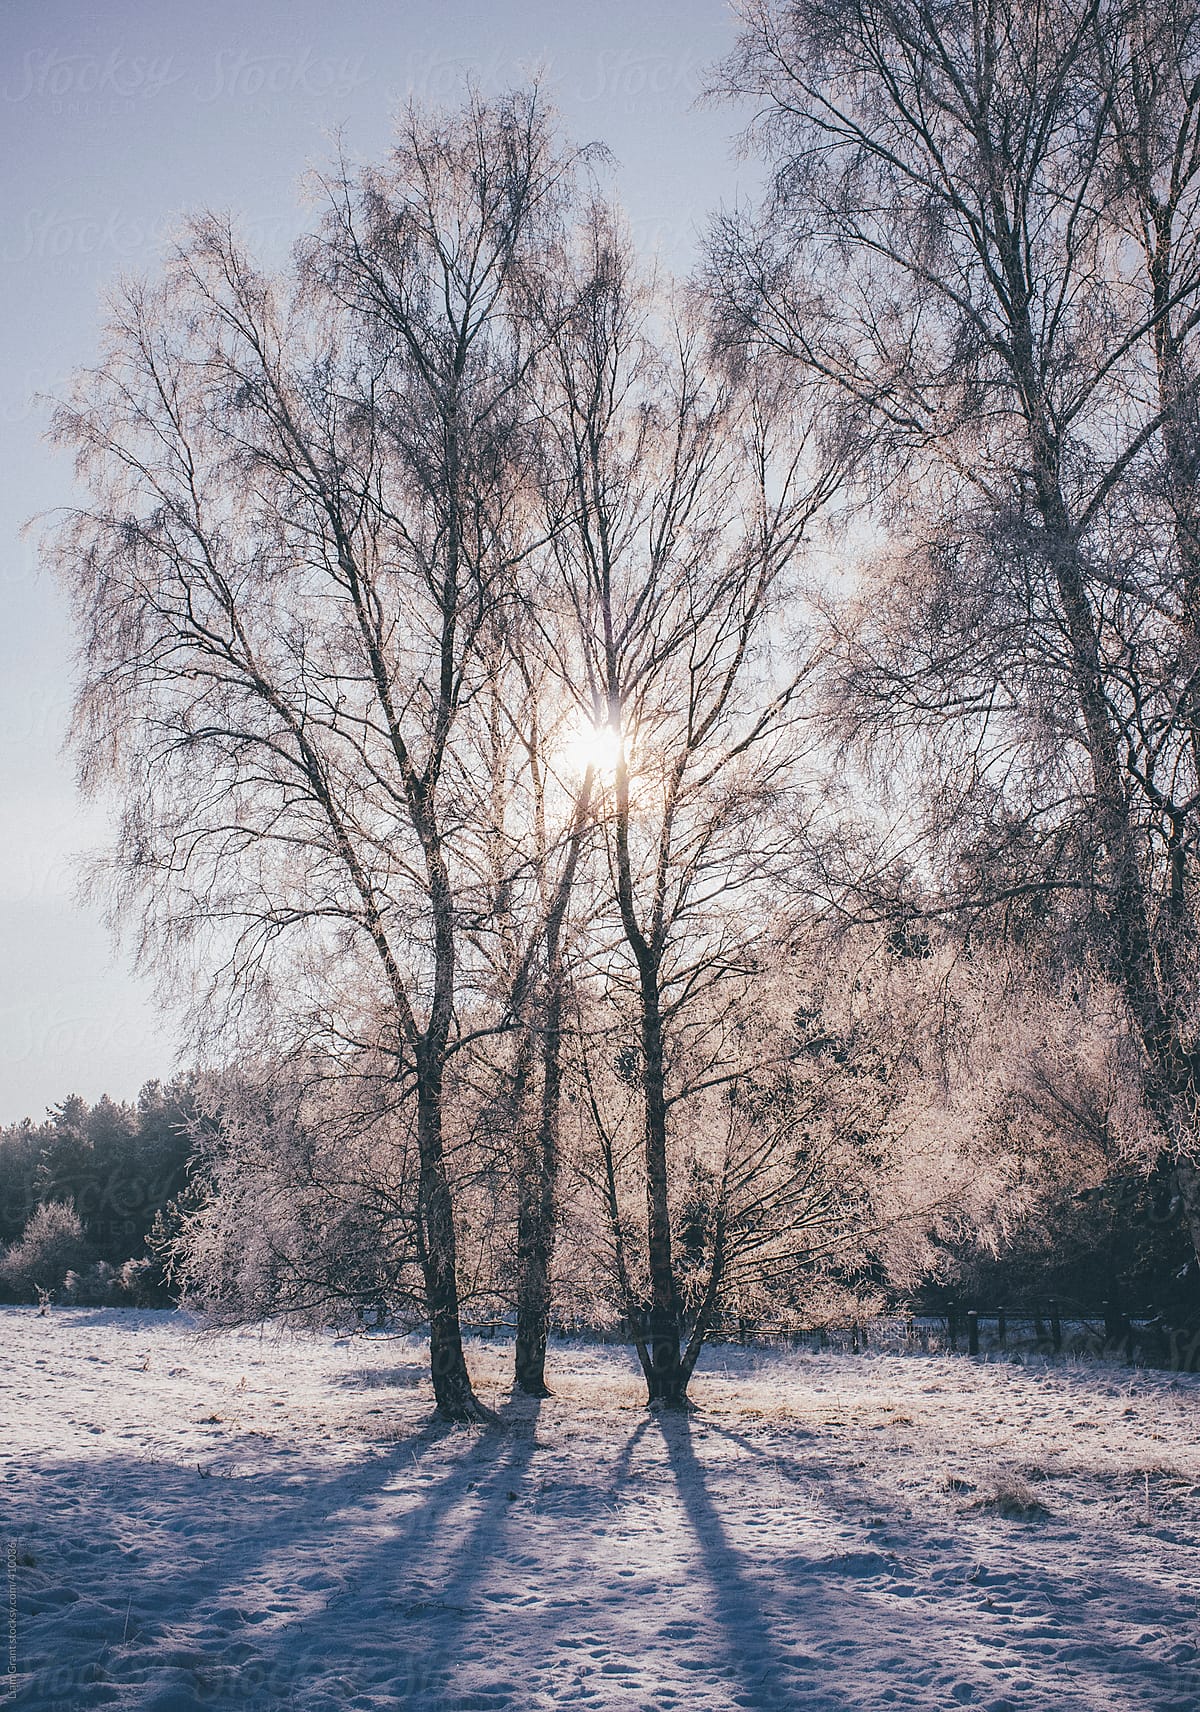 Sunlight through frozen, snow covered Silver Birch trees.